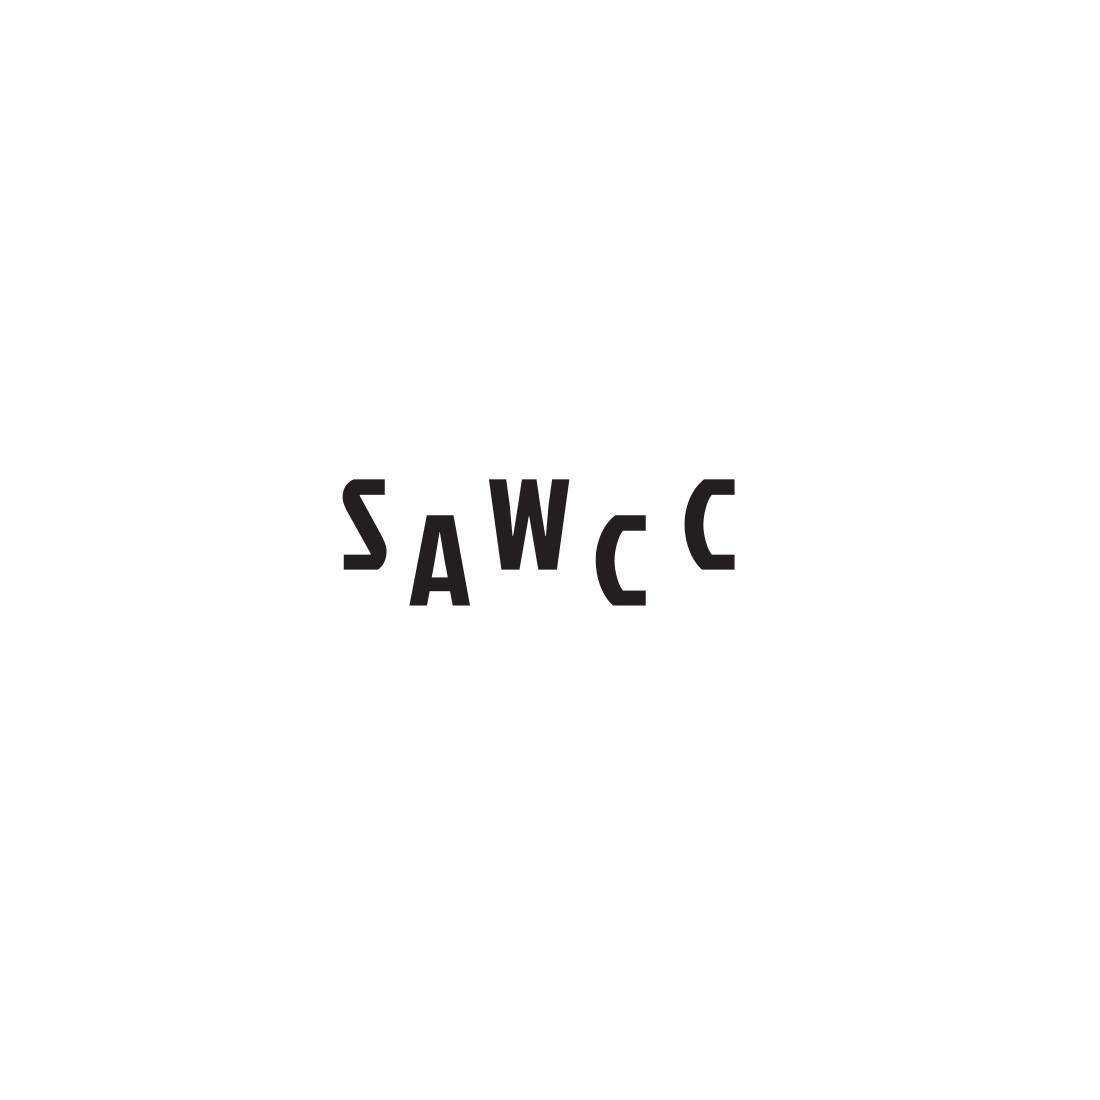 Sawcc